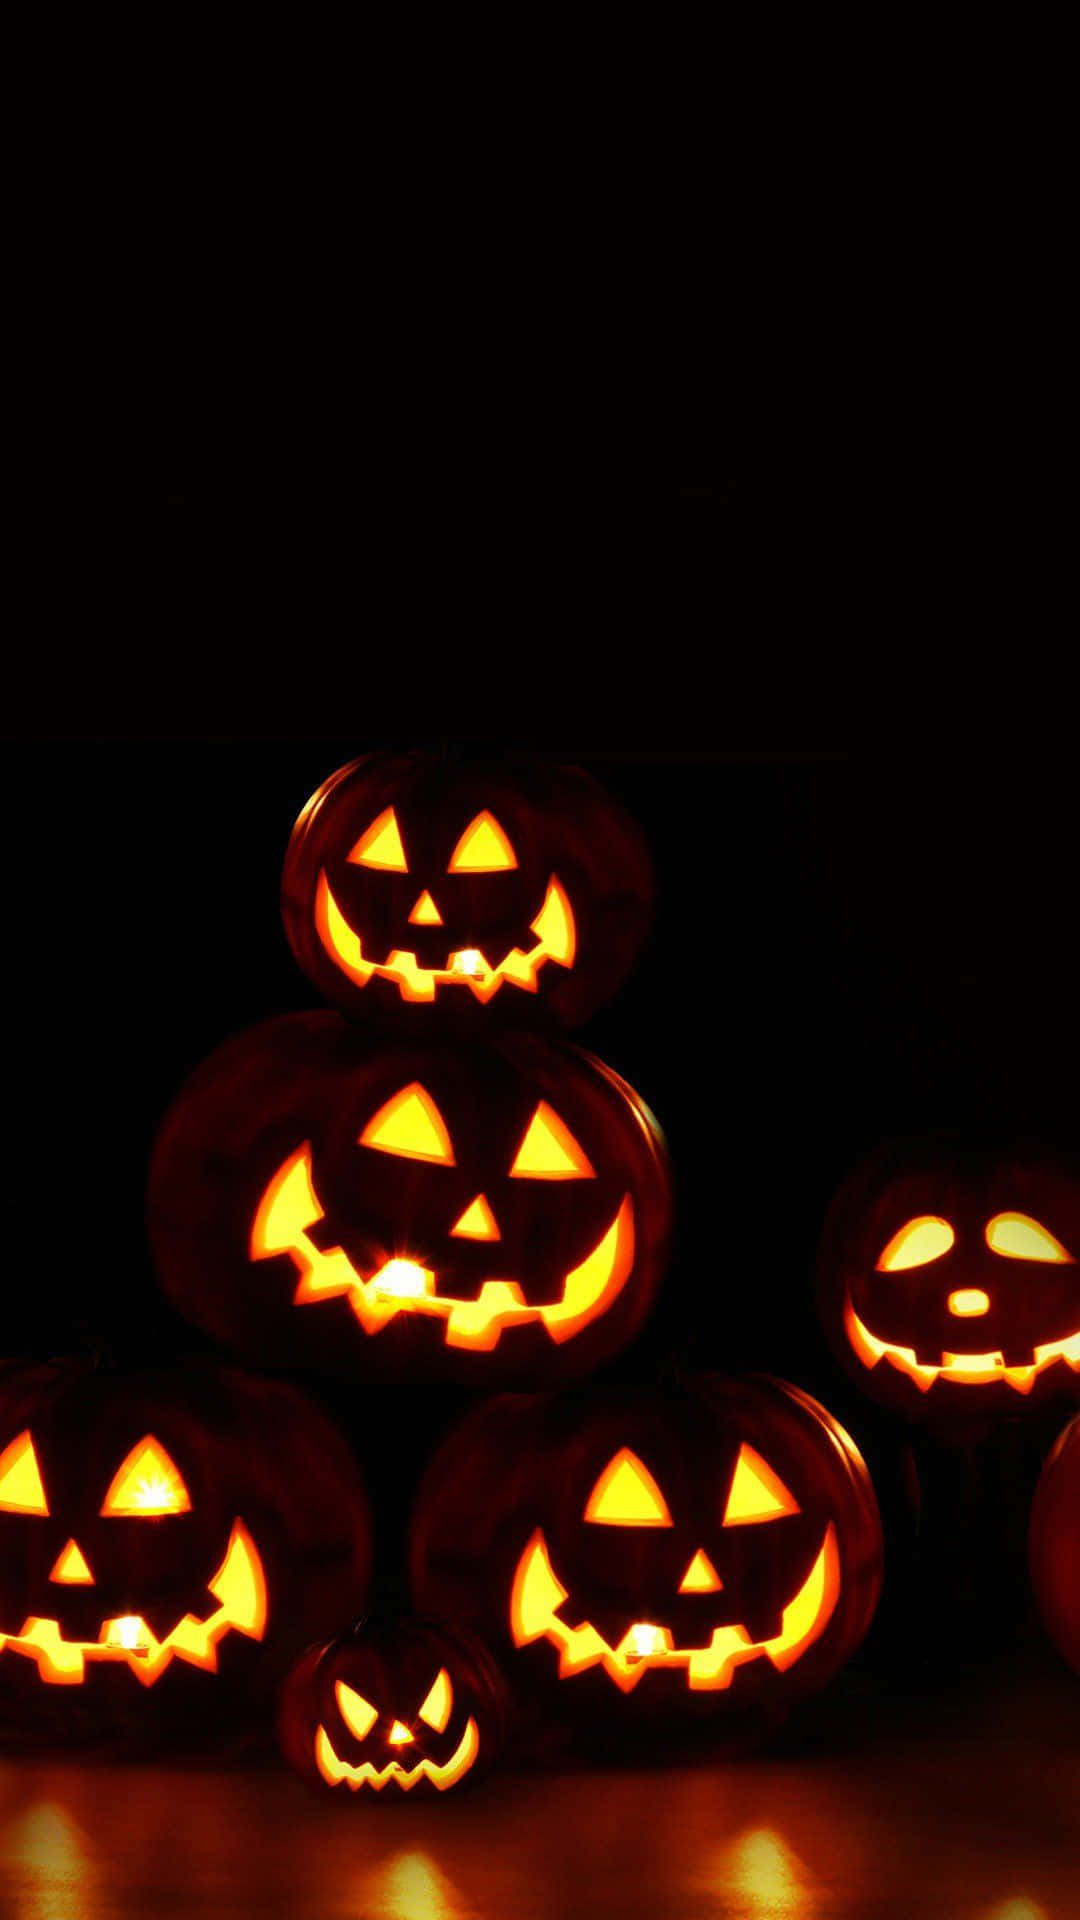 Scary-Looking Jack O'Lanterns iPhone Halloween Background